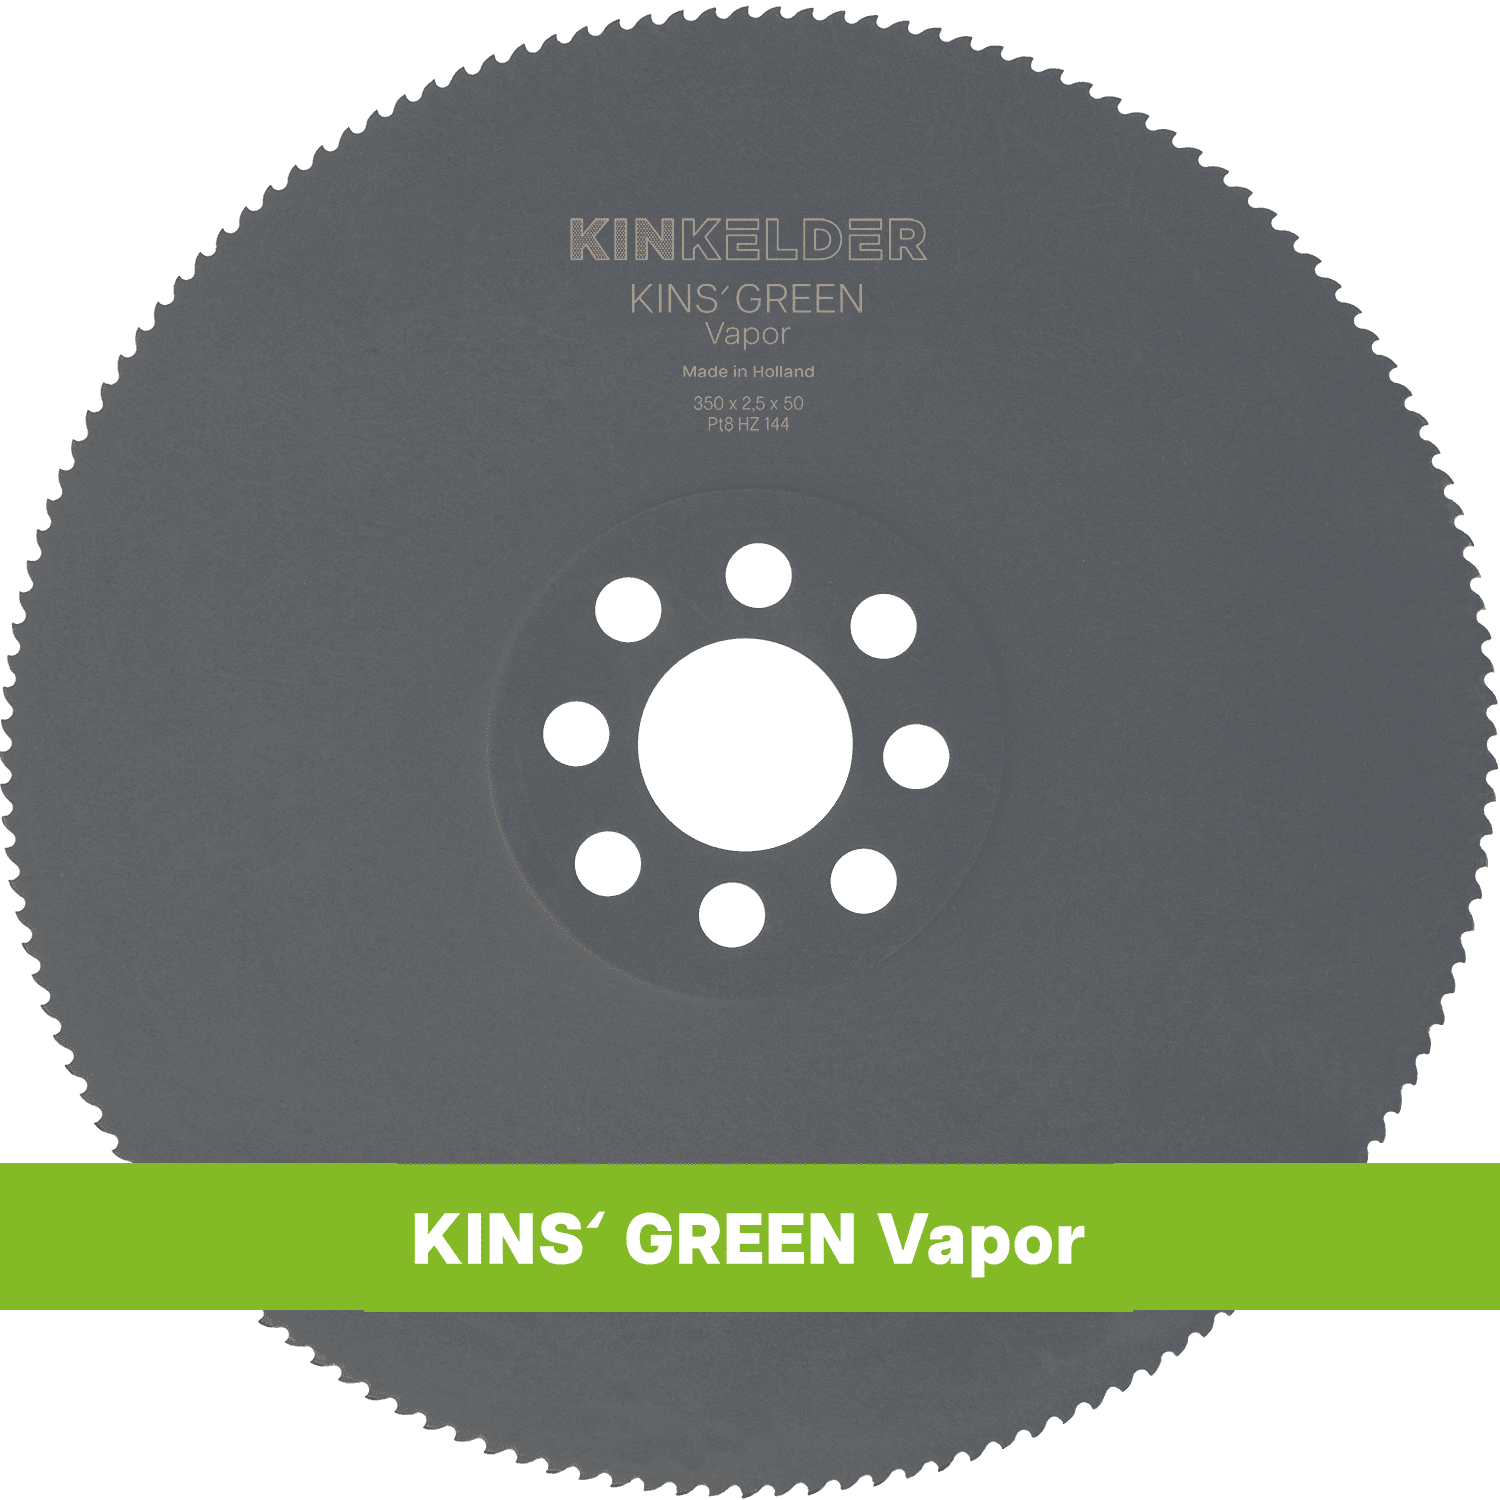 KINS‘ GREEN Vapor